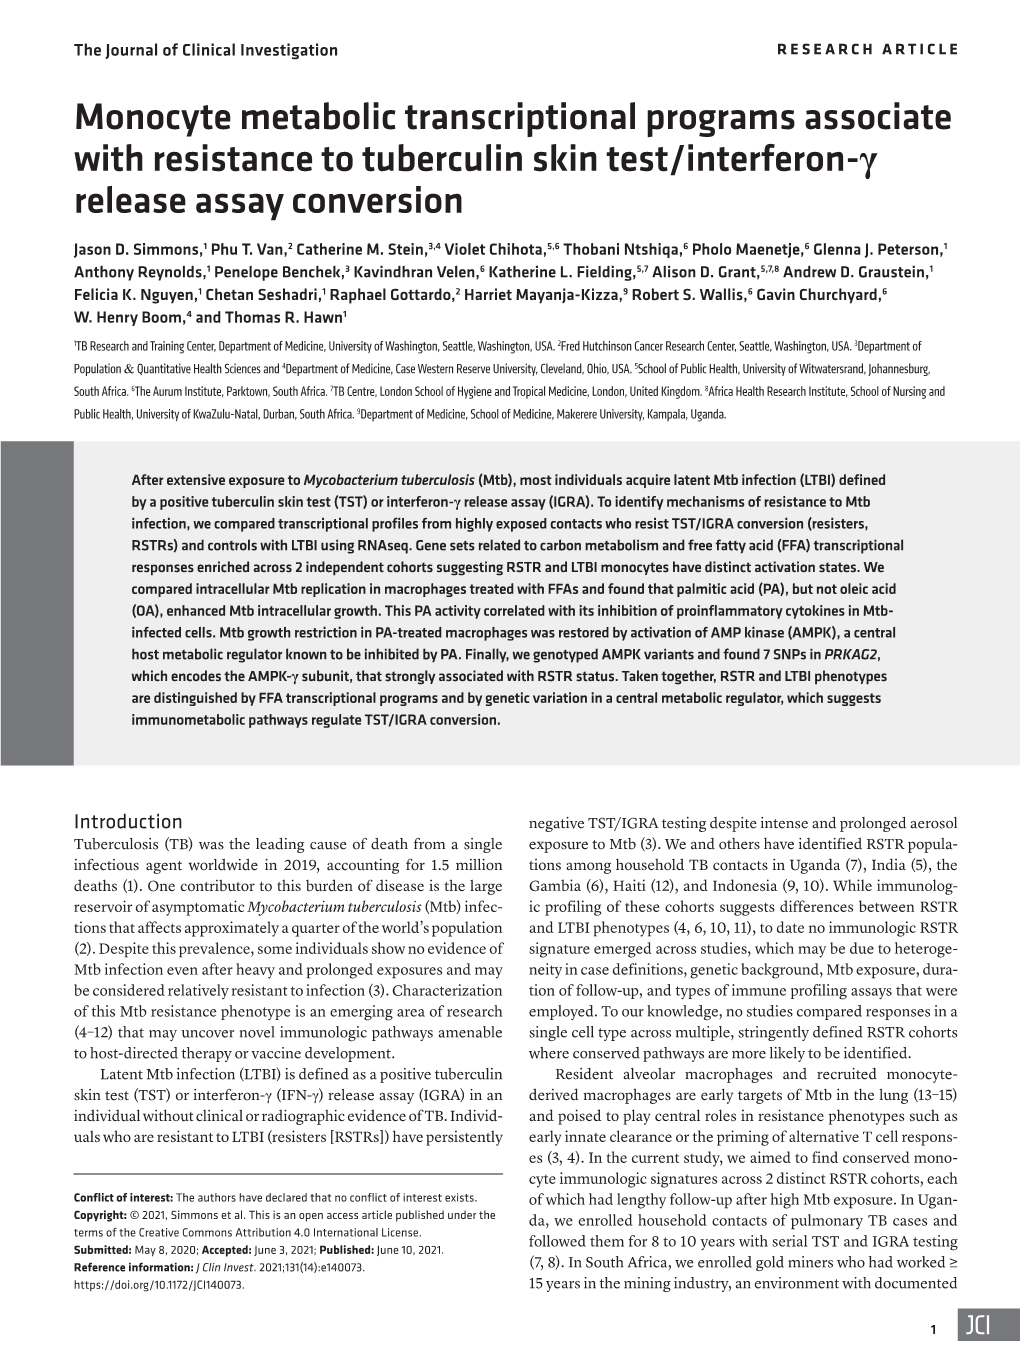 Monocyte Metabolic Transcriptional Programs Associate with Resistance to Tuberculin Skin Test/Interferon-Γ Release Assay Conversion